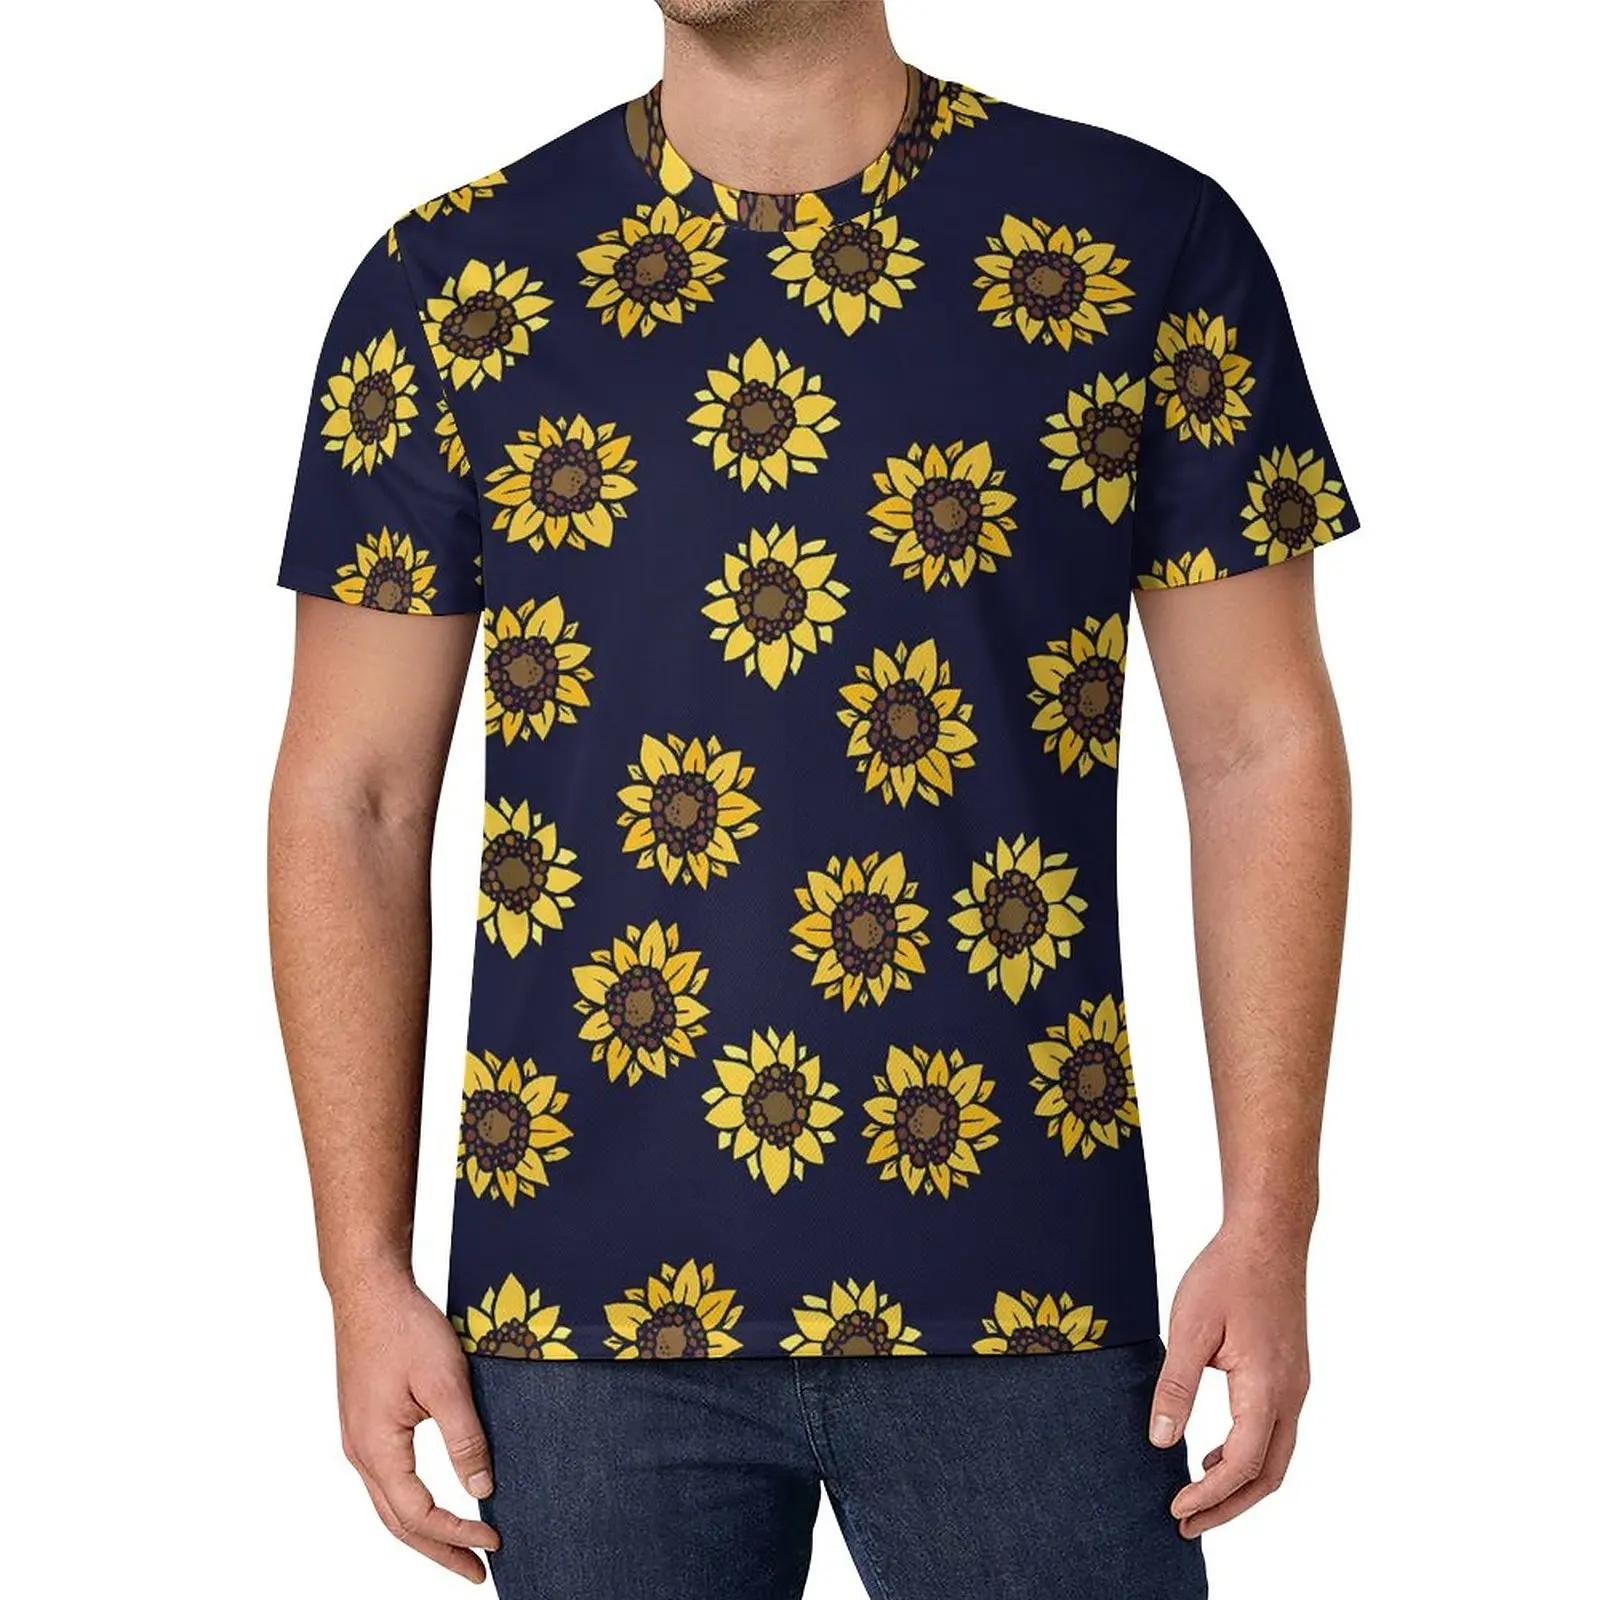 

Sunflower Print T-Shirt Summer Sunshine Retro T Shirts Short Sleeves Graphic Tops Cheap Beach Street Style Oversized Top Tees